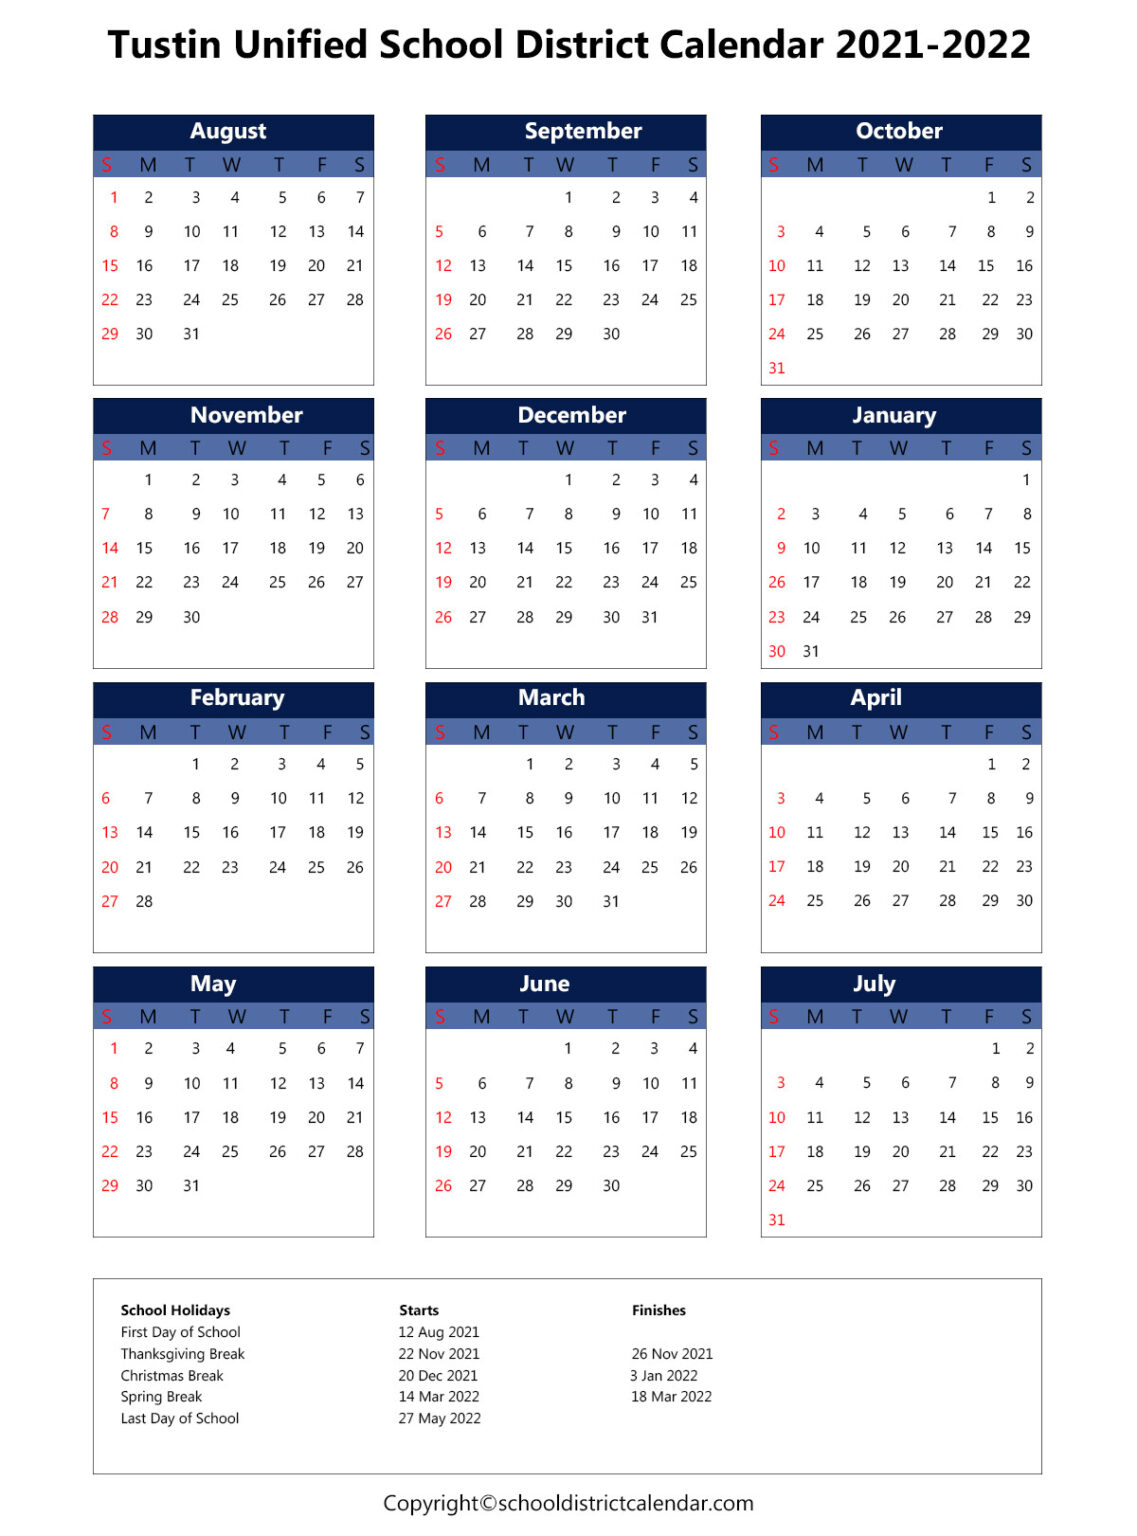 Tustin Unified School District Calendar Holidays 20212022